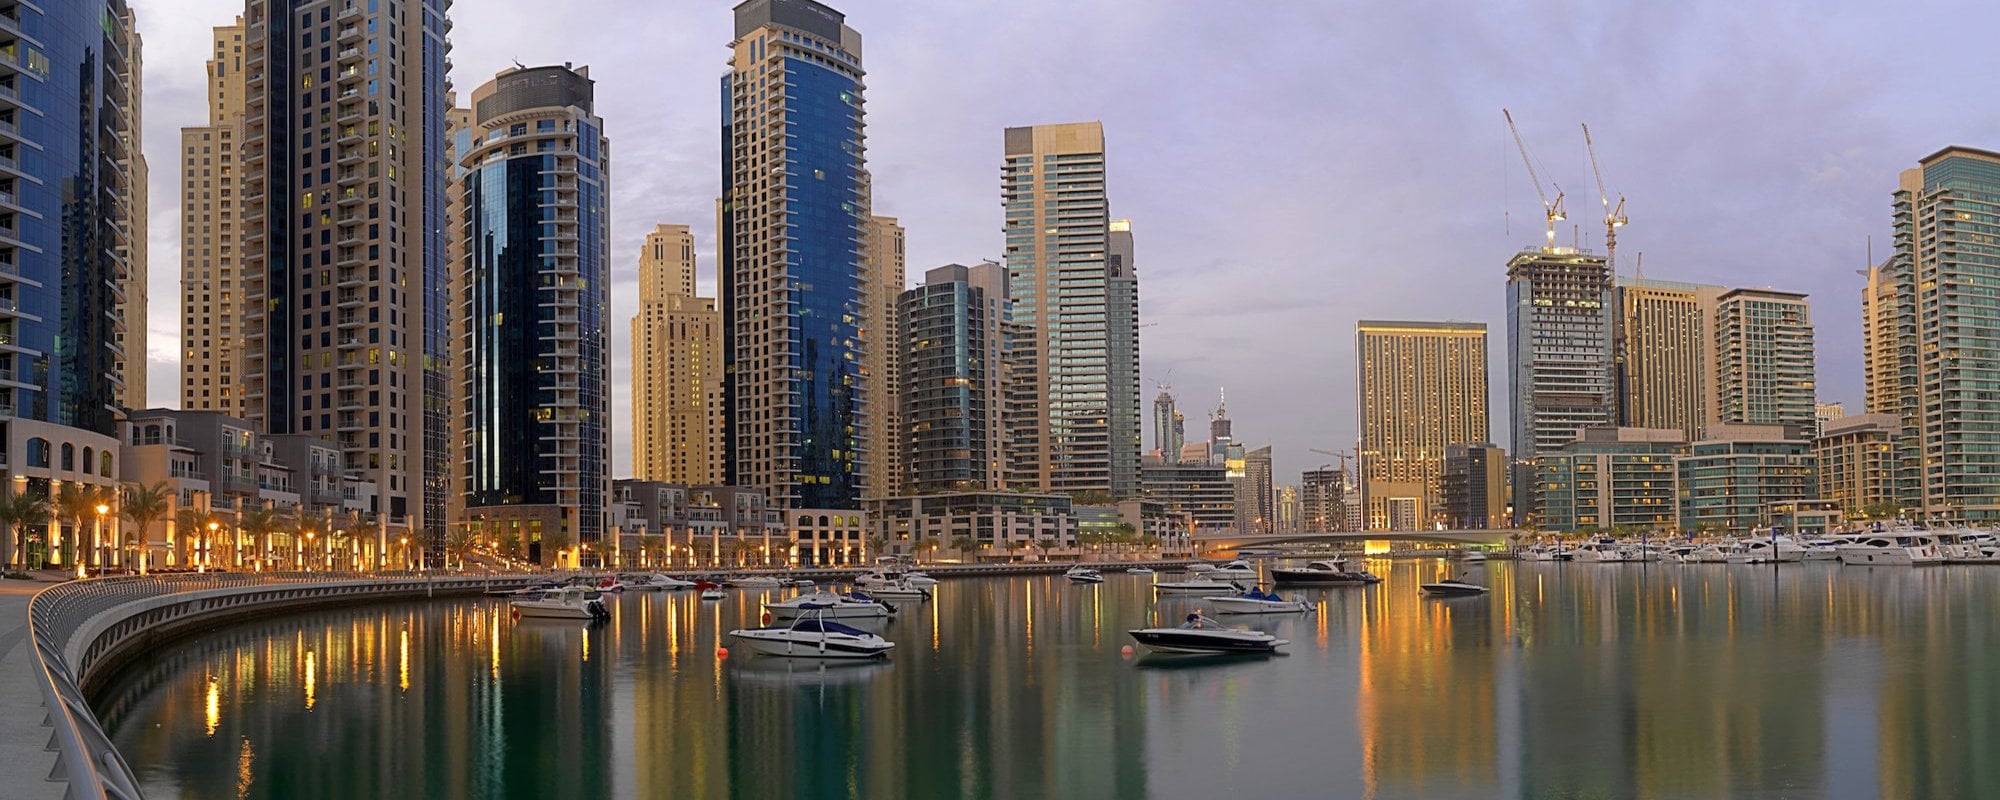 Dubai Marina Waterfront